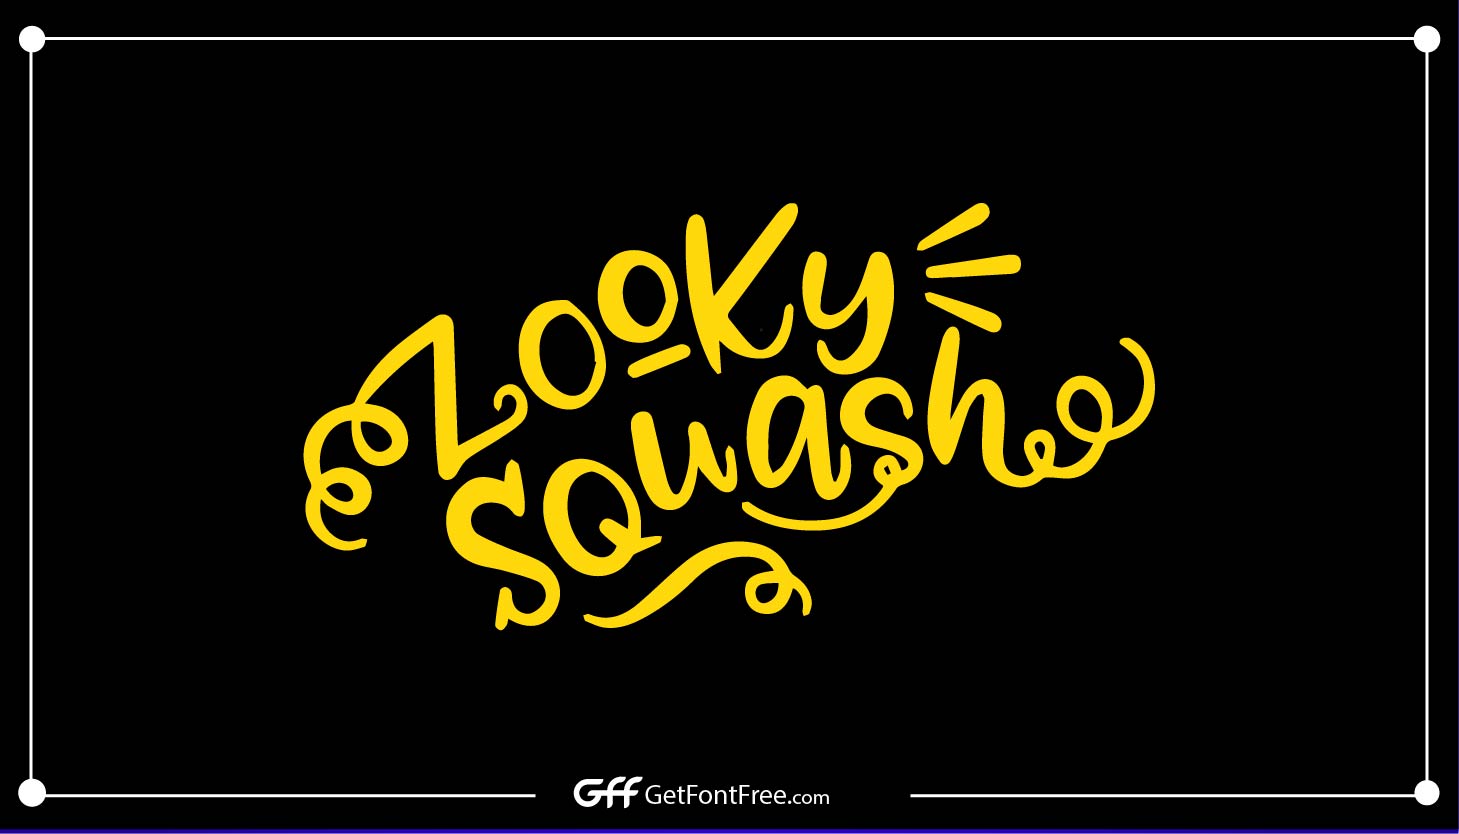 Zooky Squash Font